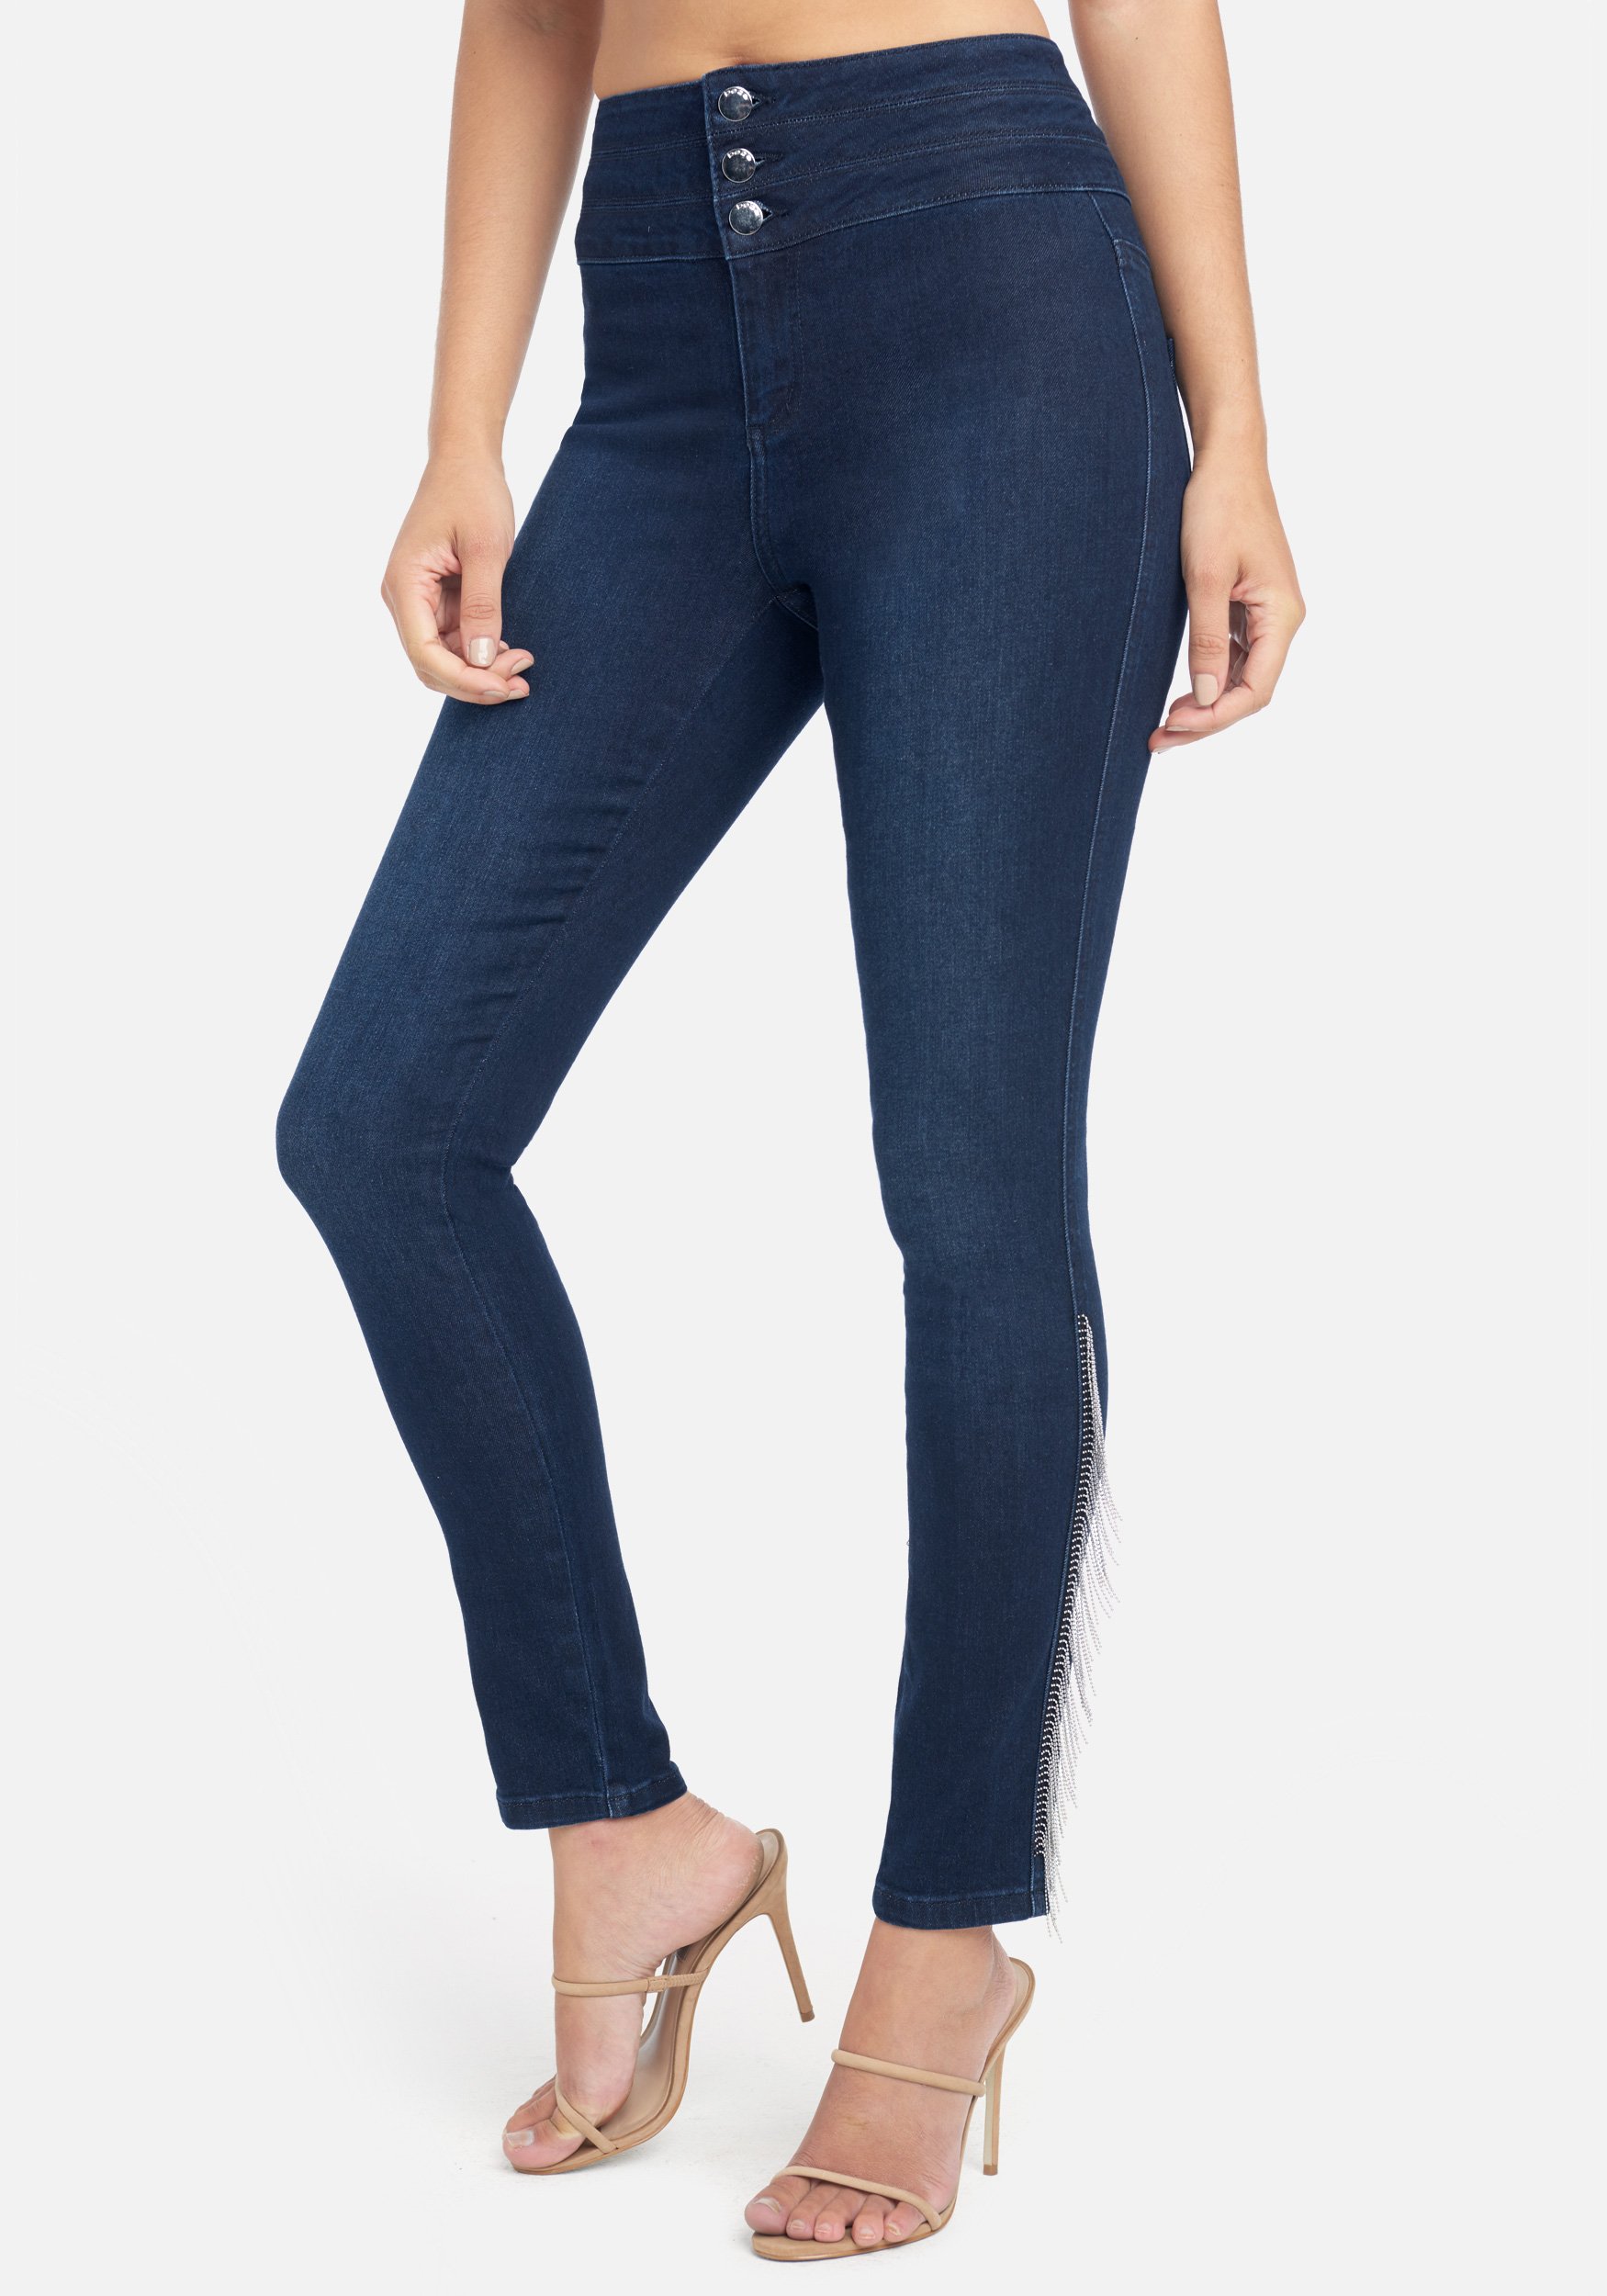 Bebe Women's Rhinestone Fringe Skinny Jeans, Size 29 in Dark Indigo Wash Cotton/Spandex